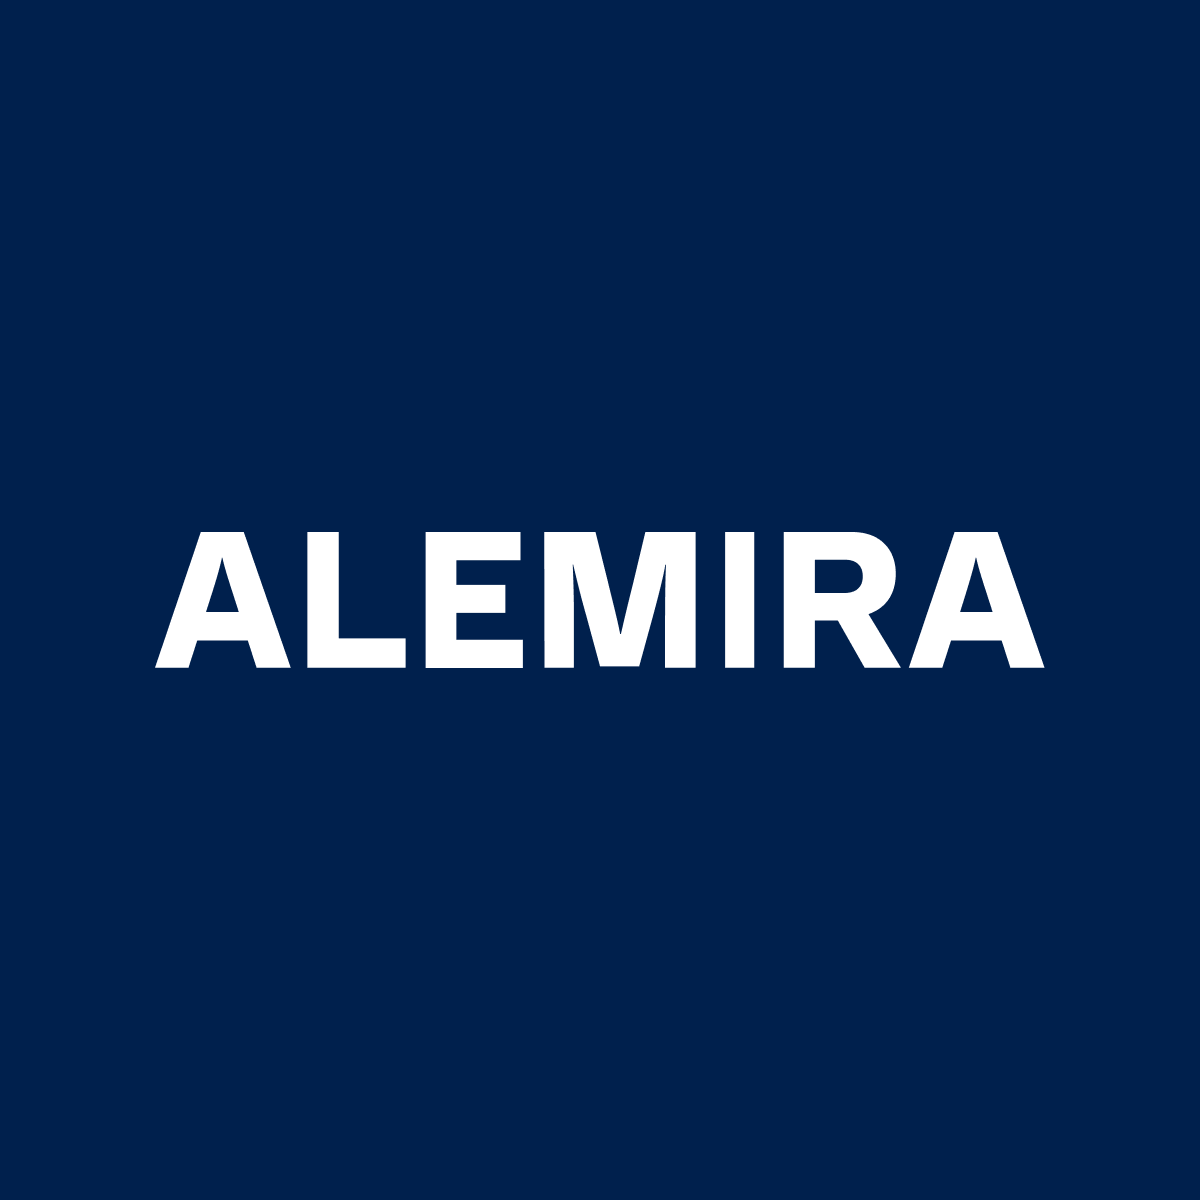 Alemira